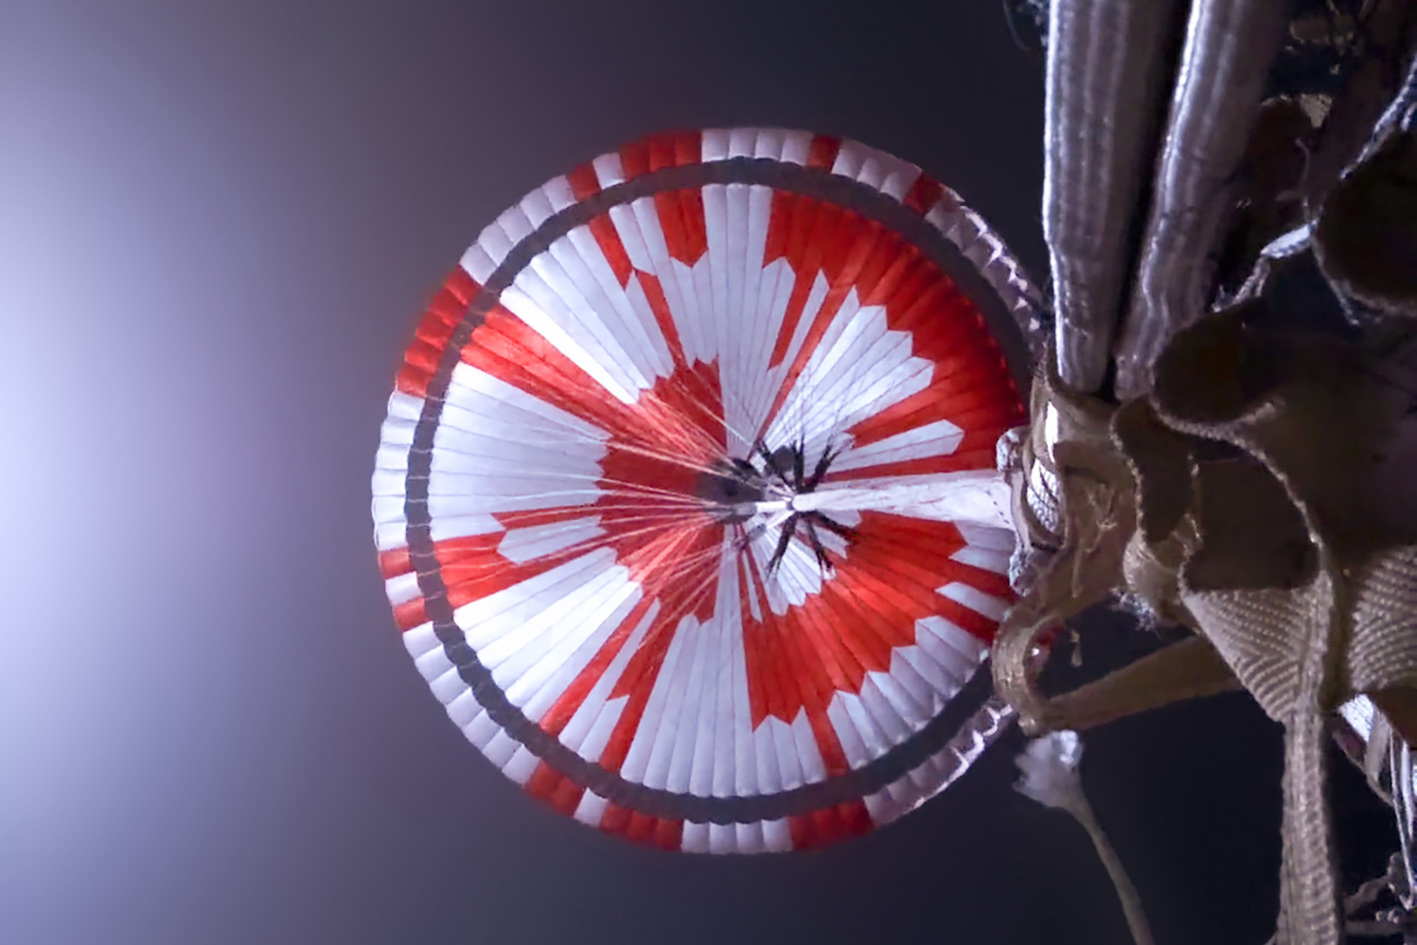 Heathcoat’s parachute fabric delivered NASA’s Perseverance Rover onto the surface of Mars in February 2021. © Heathcoat Fabrics